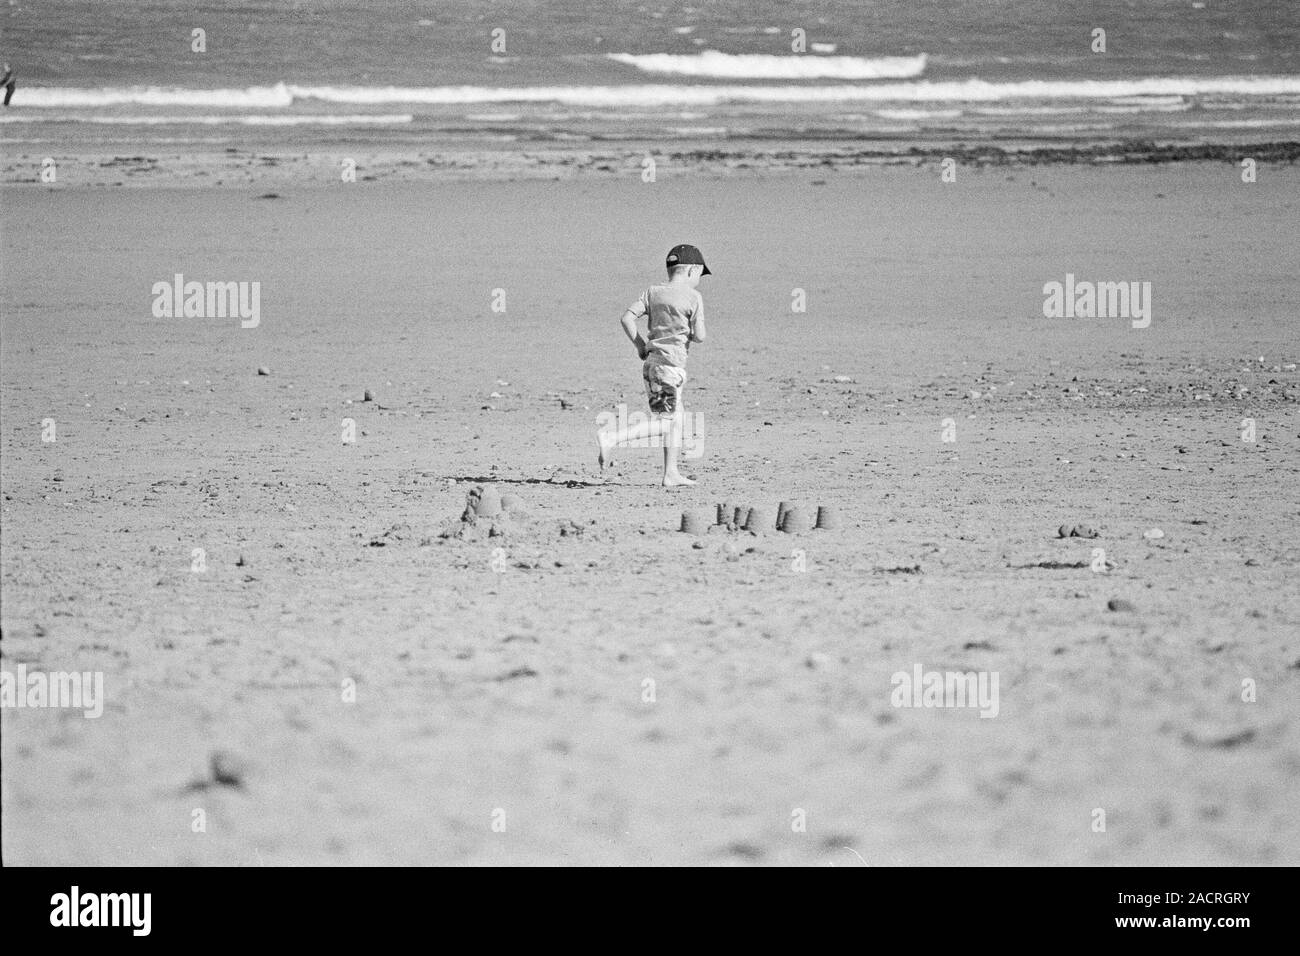 Boy running on sandy beach, Saltburn - United Kingdom Stock Photo